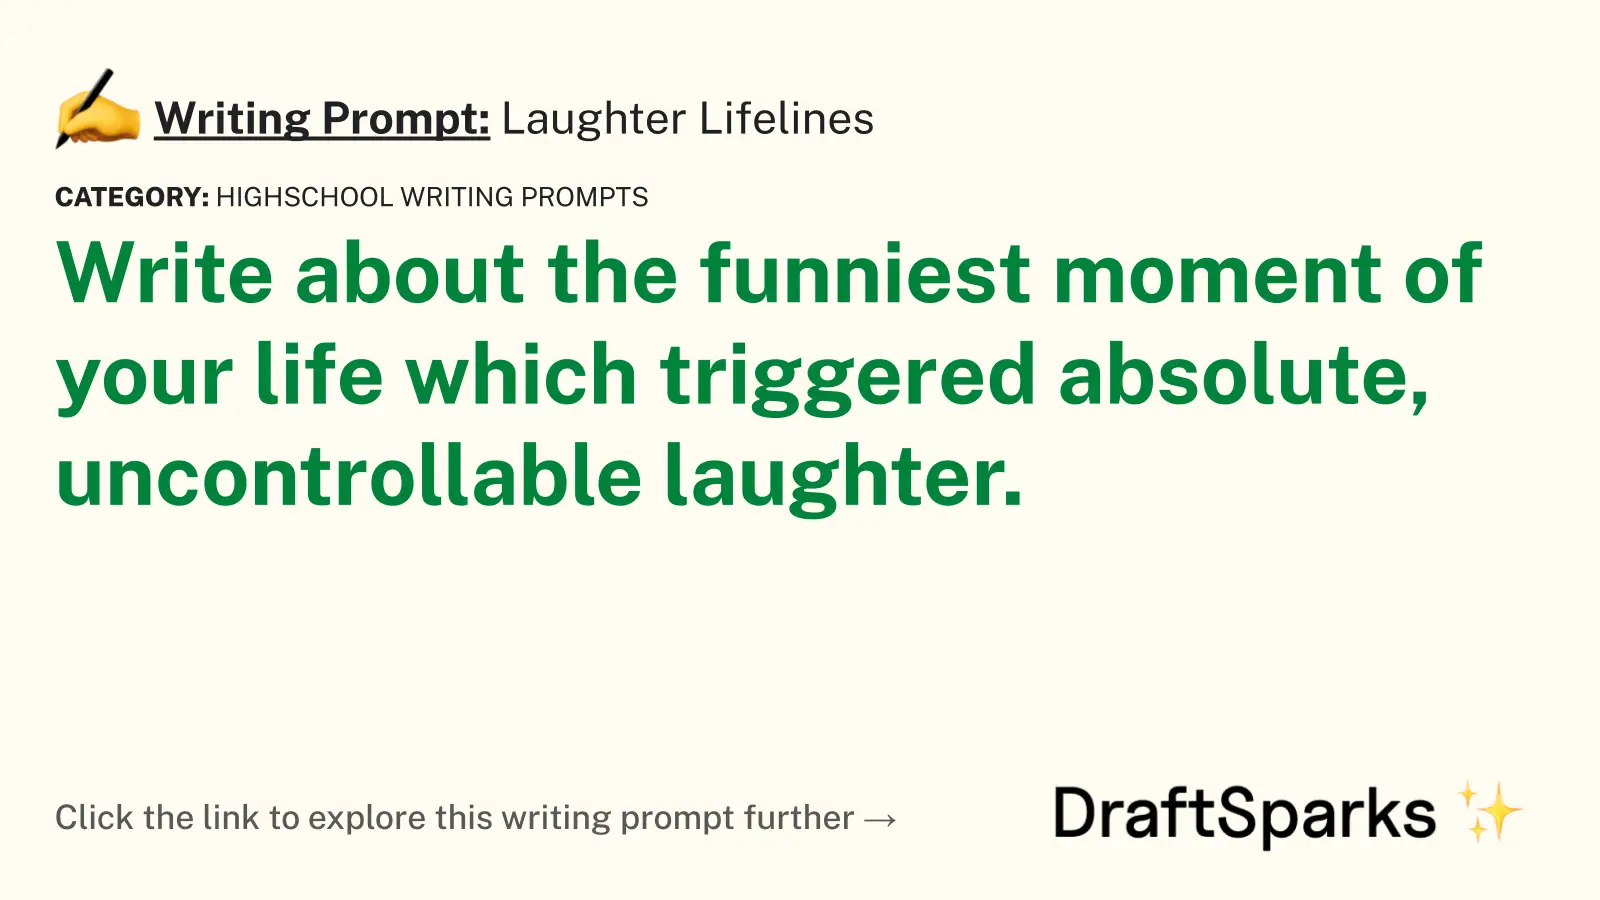 Laughter Lifelines